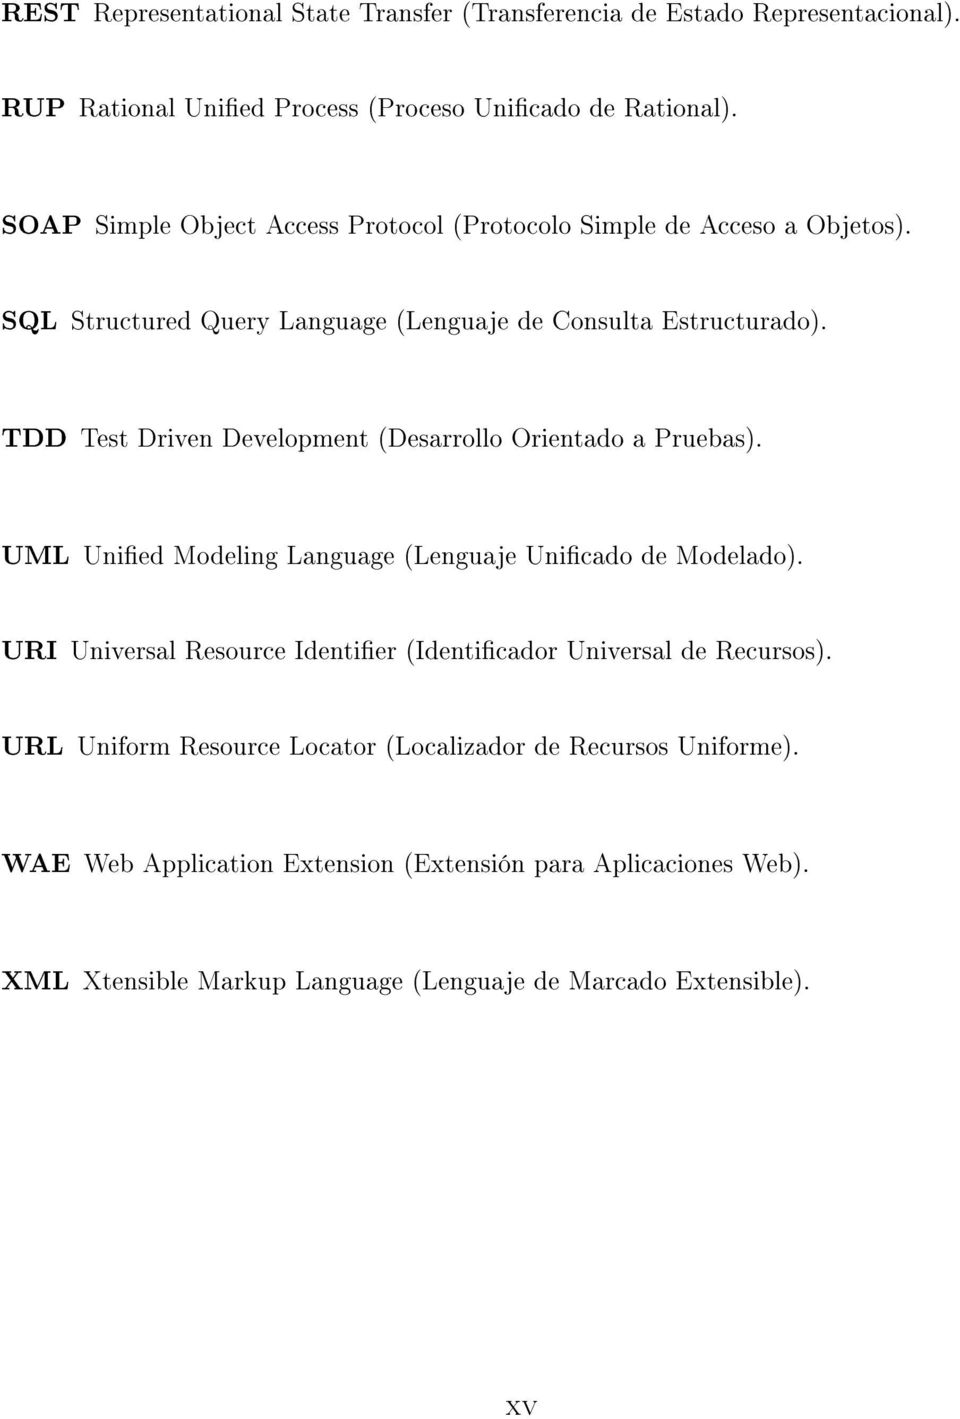 TDD Test Driven Development (Desarrollo Orientado a Pruebas). UML Unied Modeling Language (Lenguaje Unicado de Modelado).